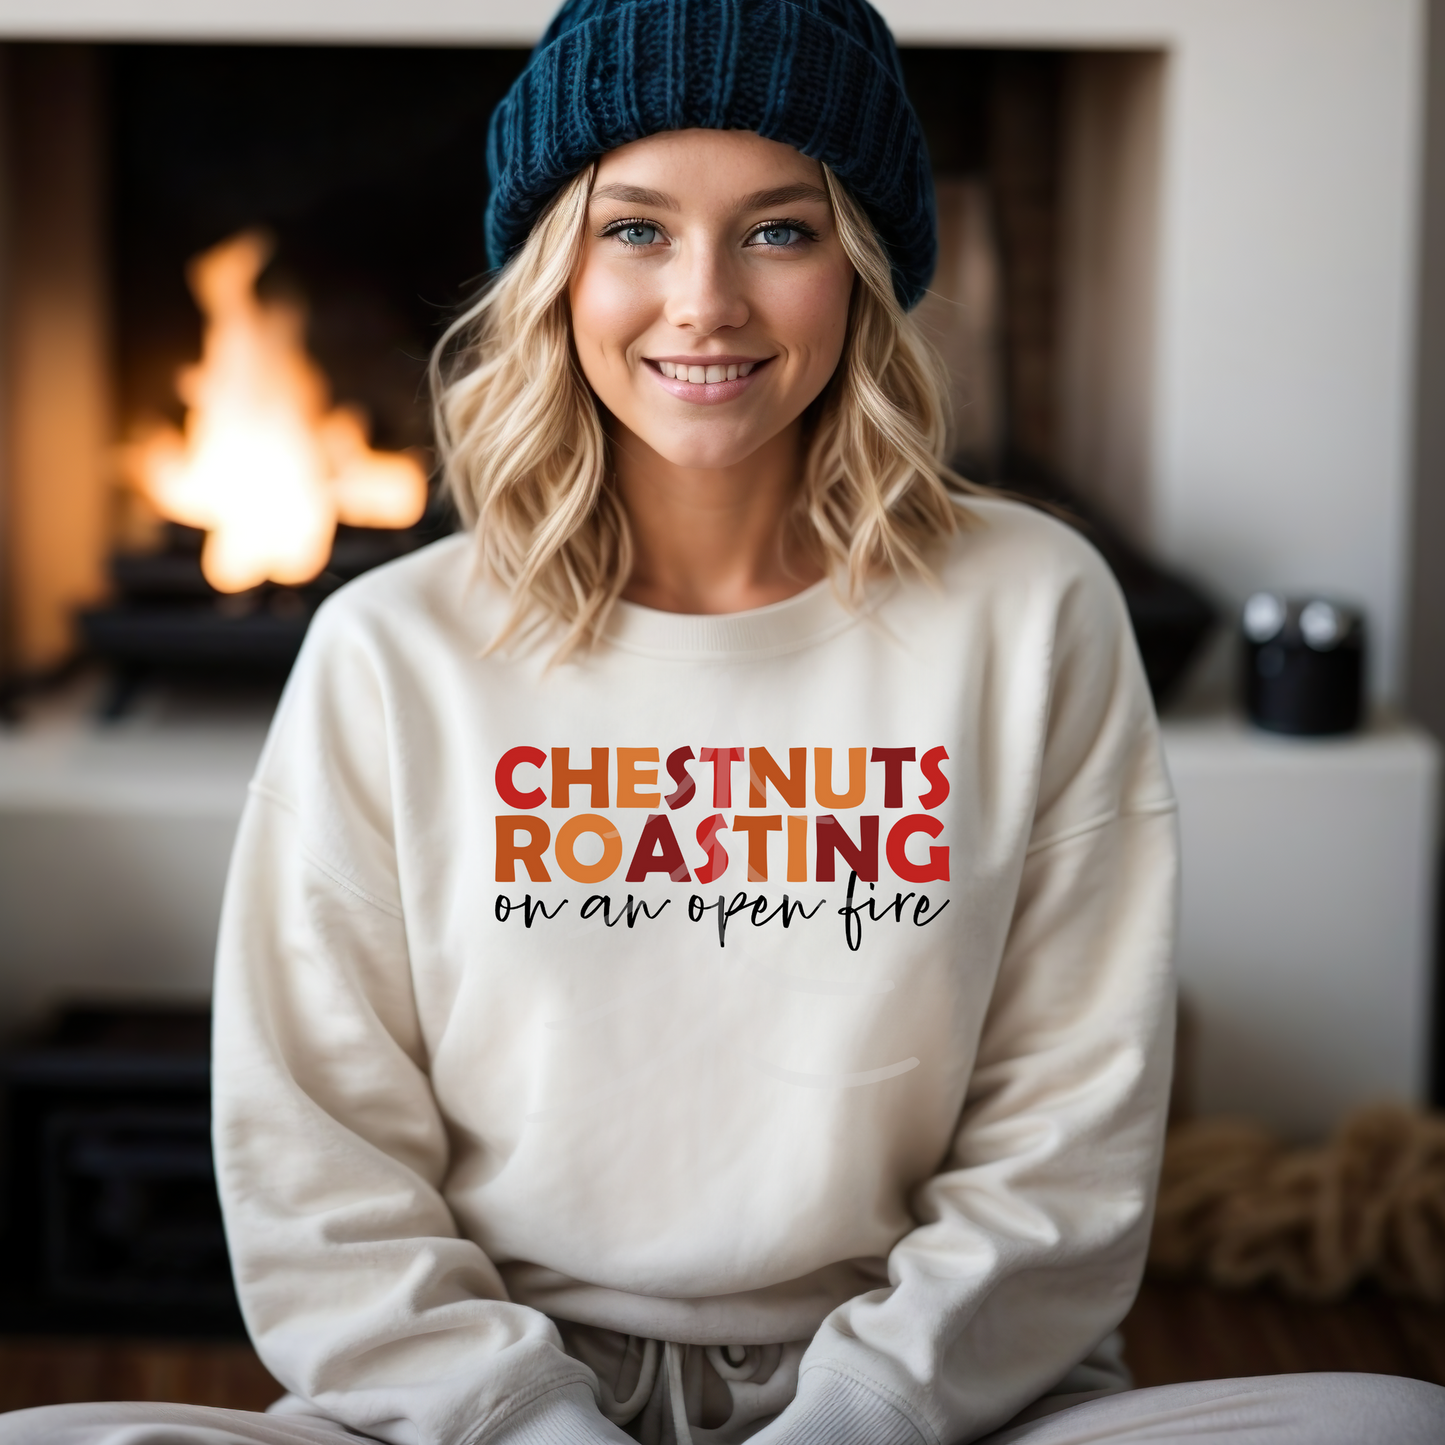 Chestnuts roasting on an open fire T-Shirt or Sweatshirt